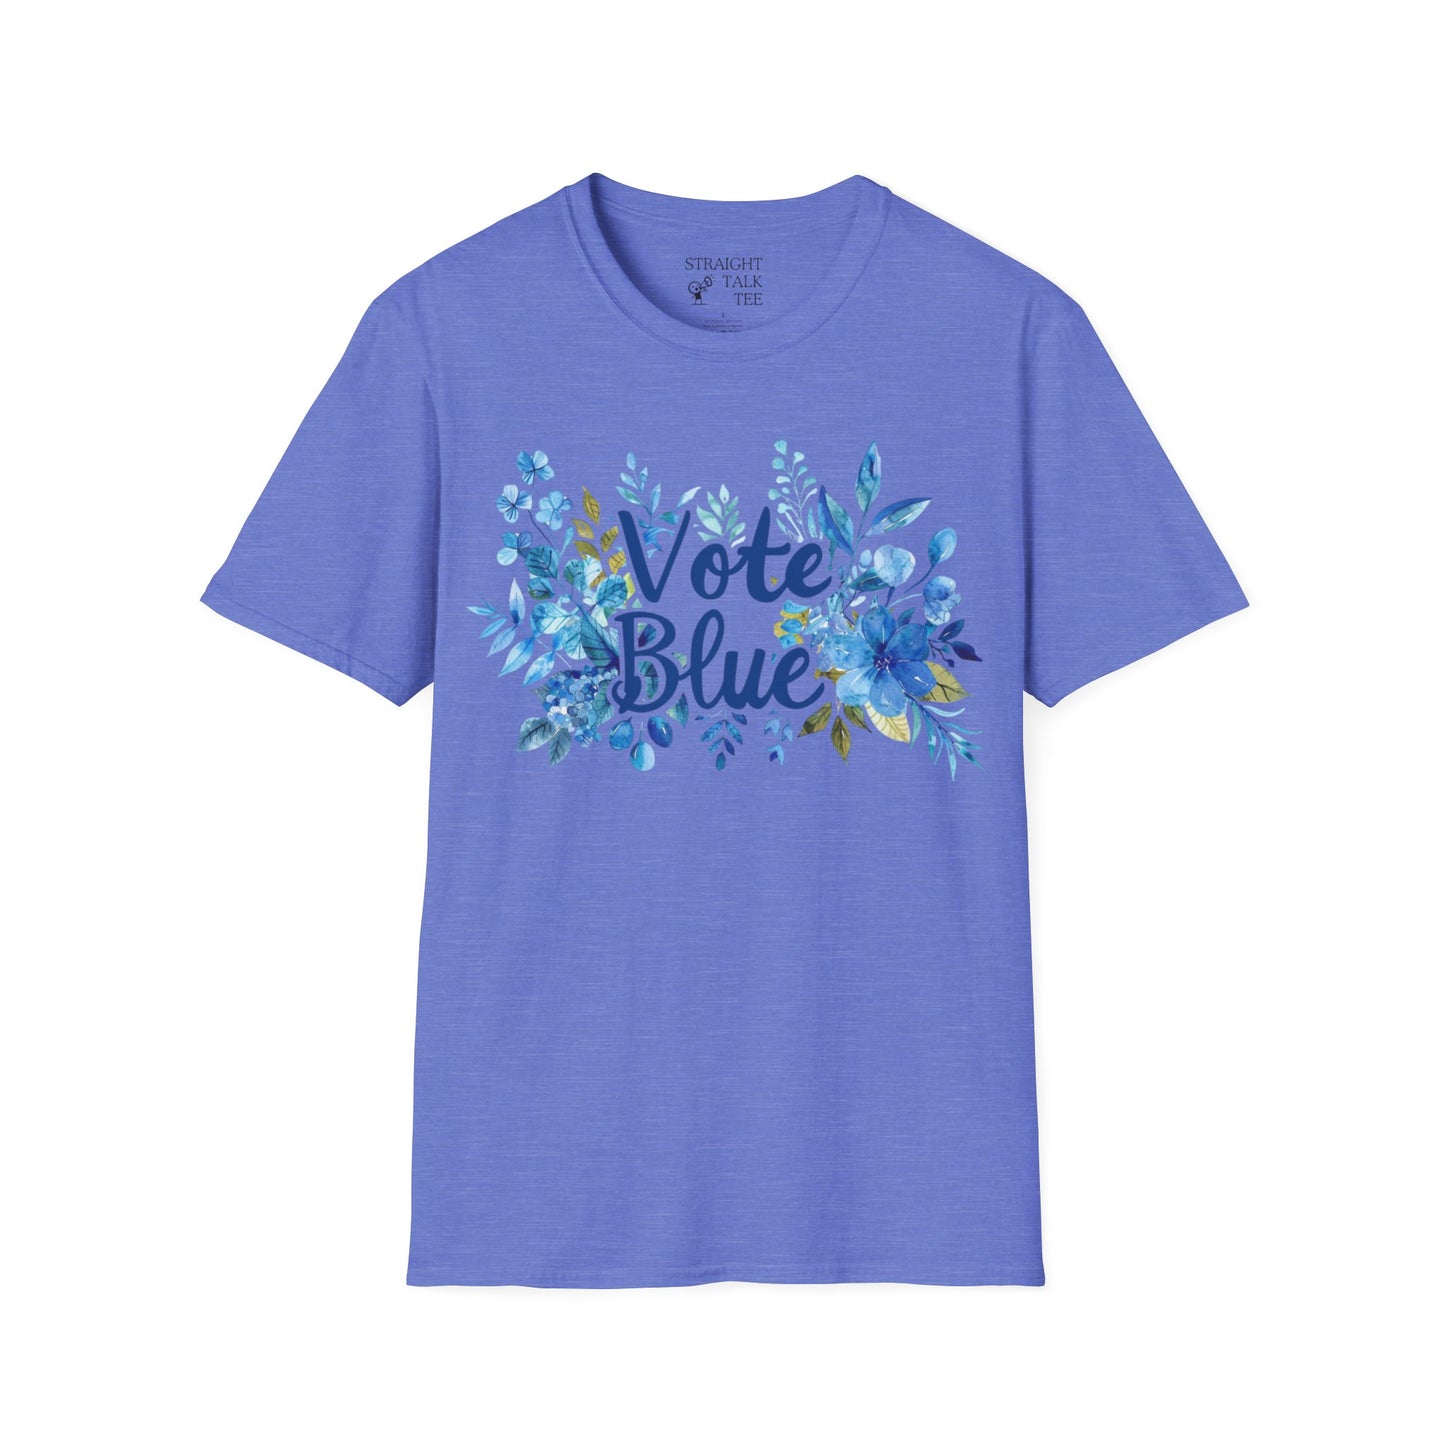 Vote Blue Political Shirt Vote Unisex T-Shirt Liberal tee Leftist Election Activisim tshirt Vote Democrat shirt Activist tee